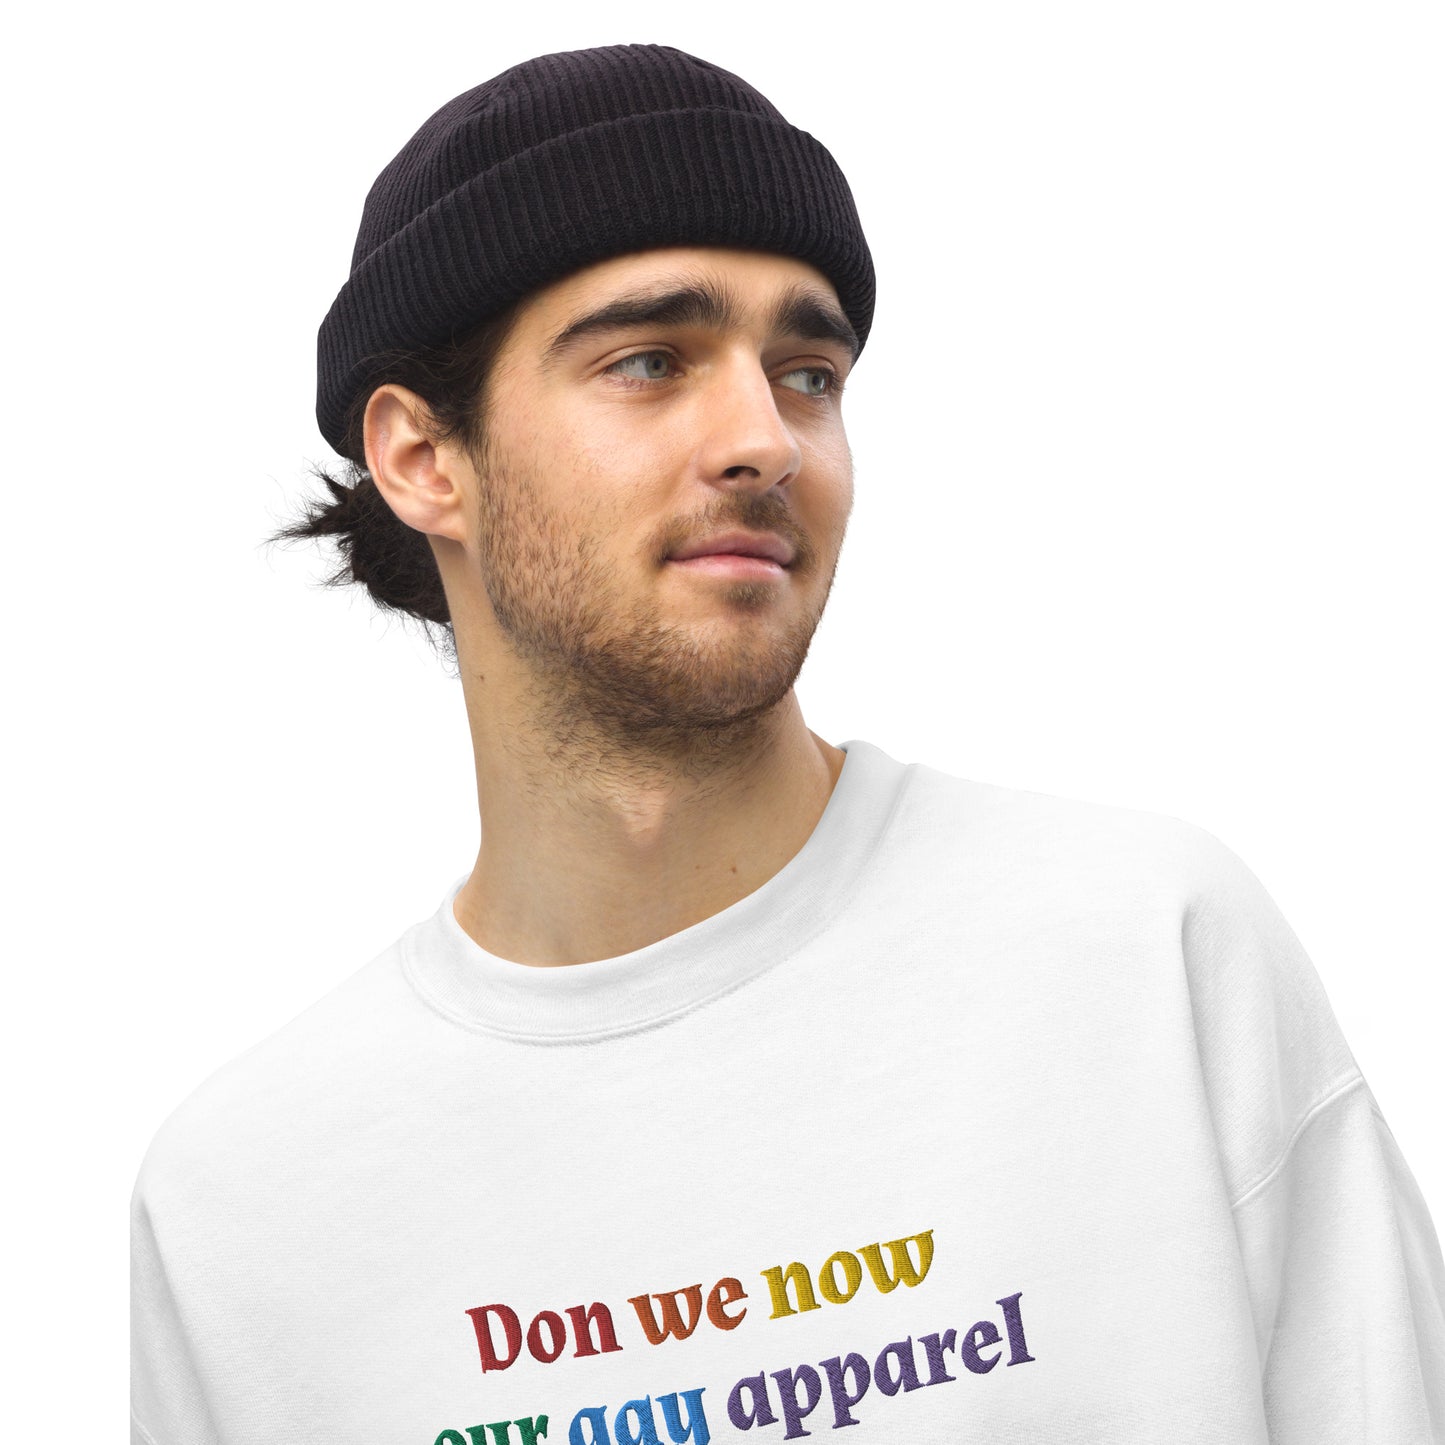 Gay Apparel - Unisex Sweatshirt